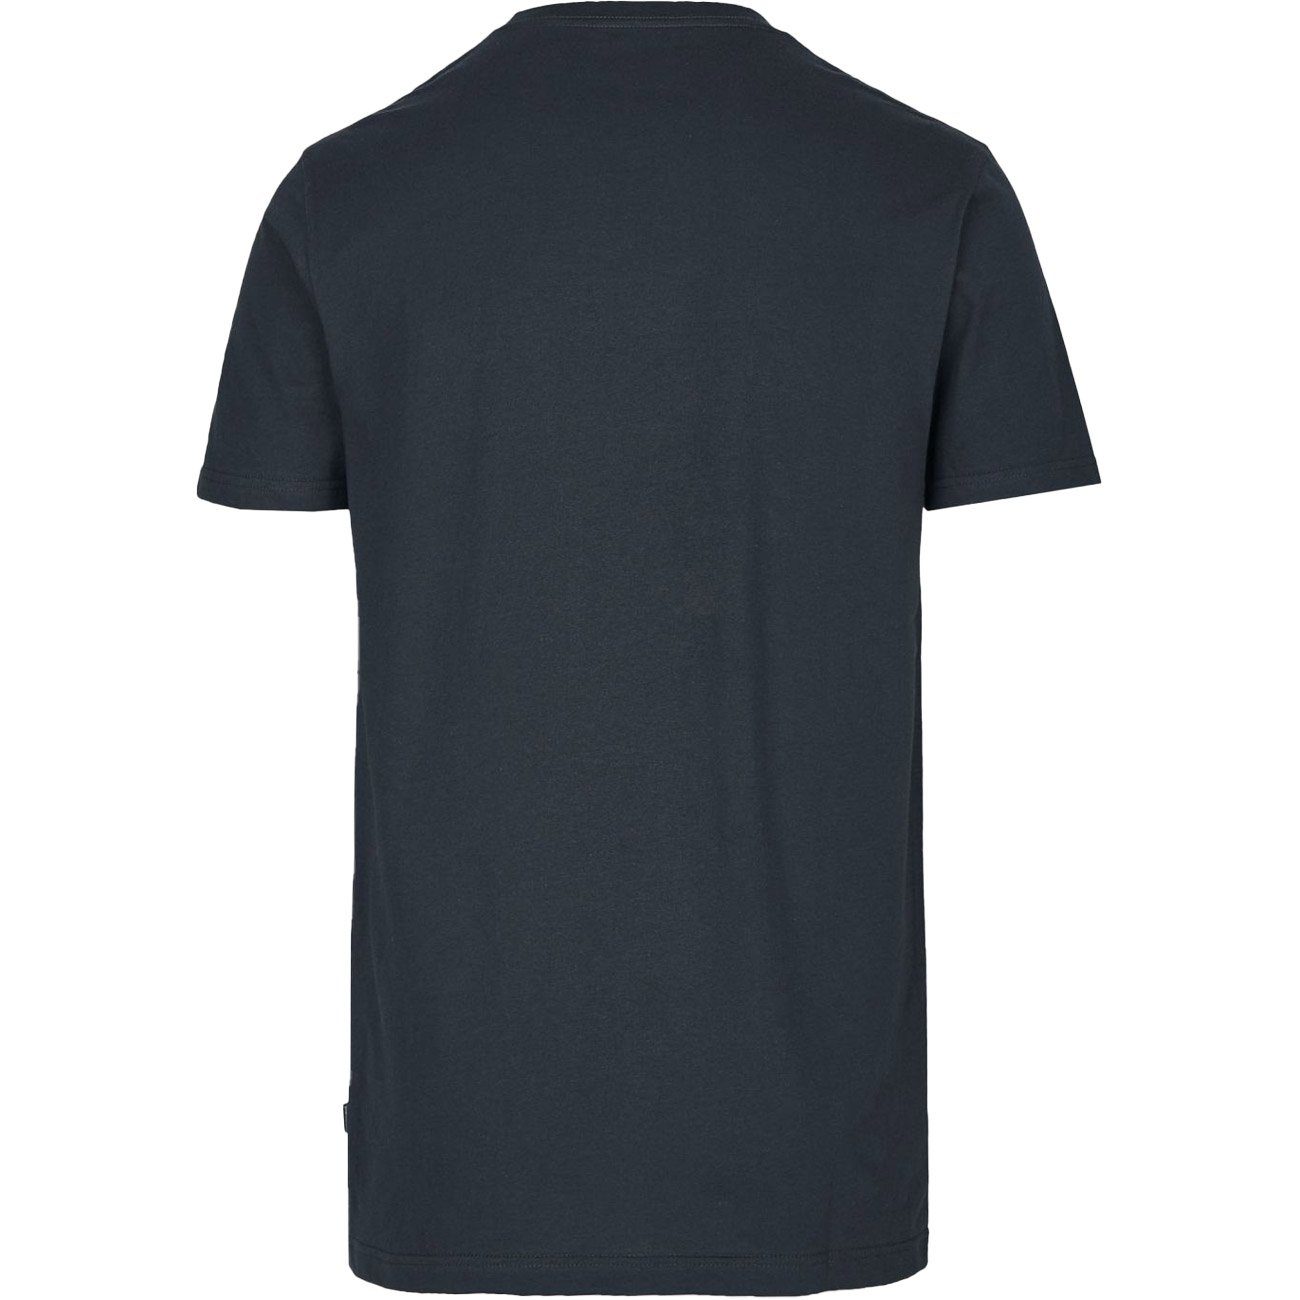 Cleptomanicx T-Shirt Ligull blue mirage Regular